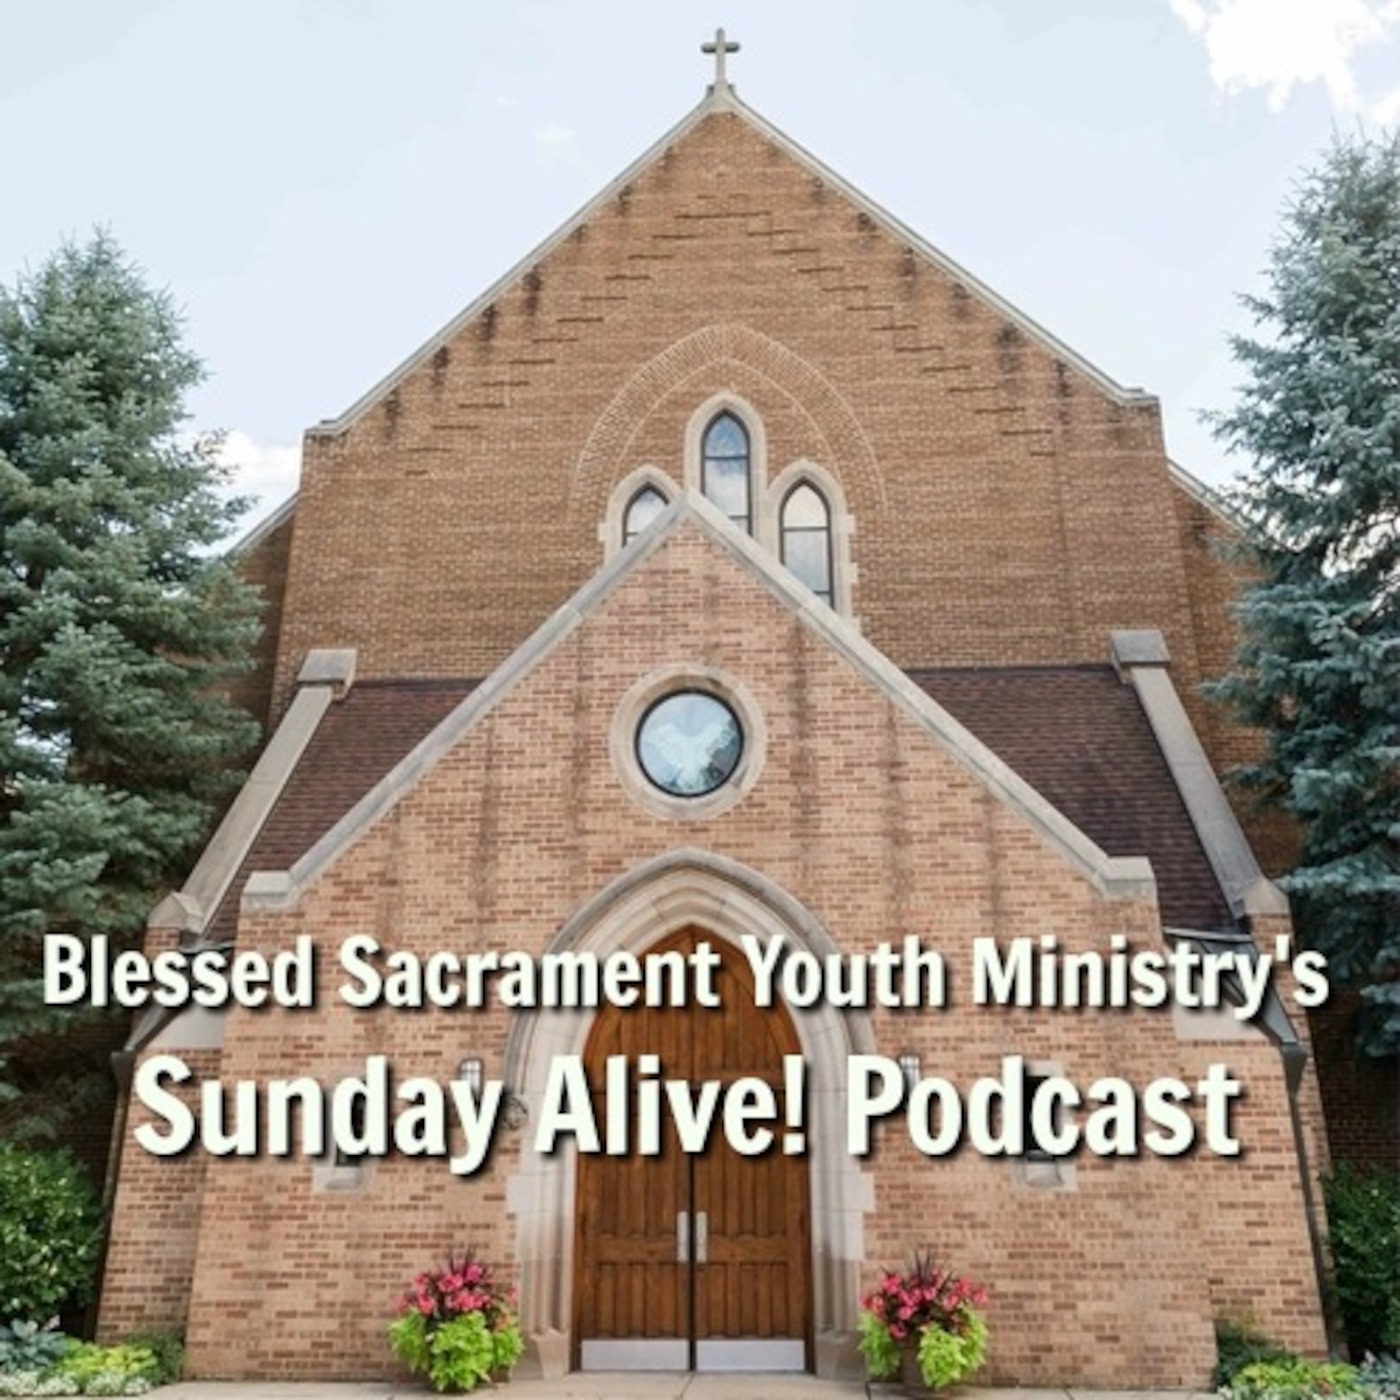 The Sunday Alive Podcast - Sunday, November 17, 2019 - the Thirty-third Sunday of Ordinary Time